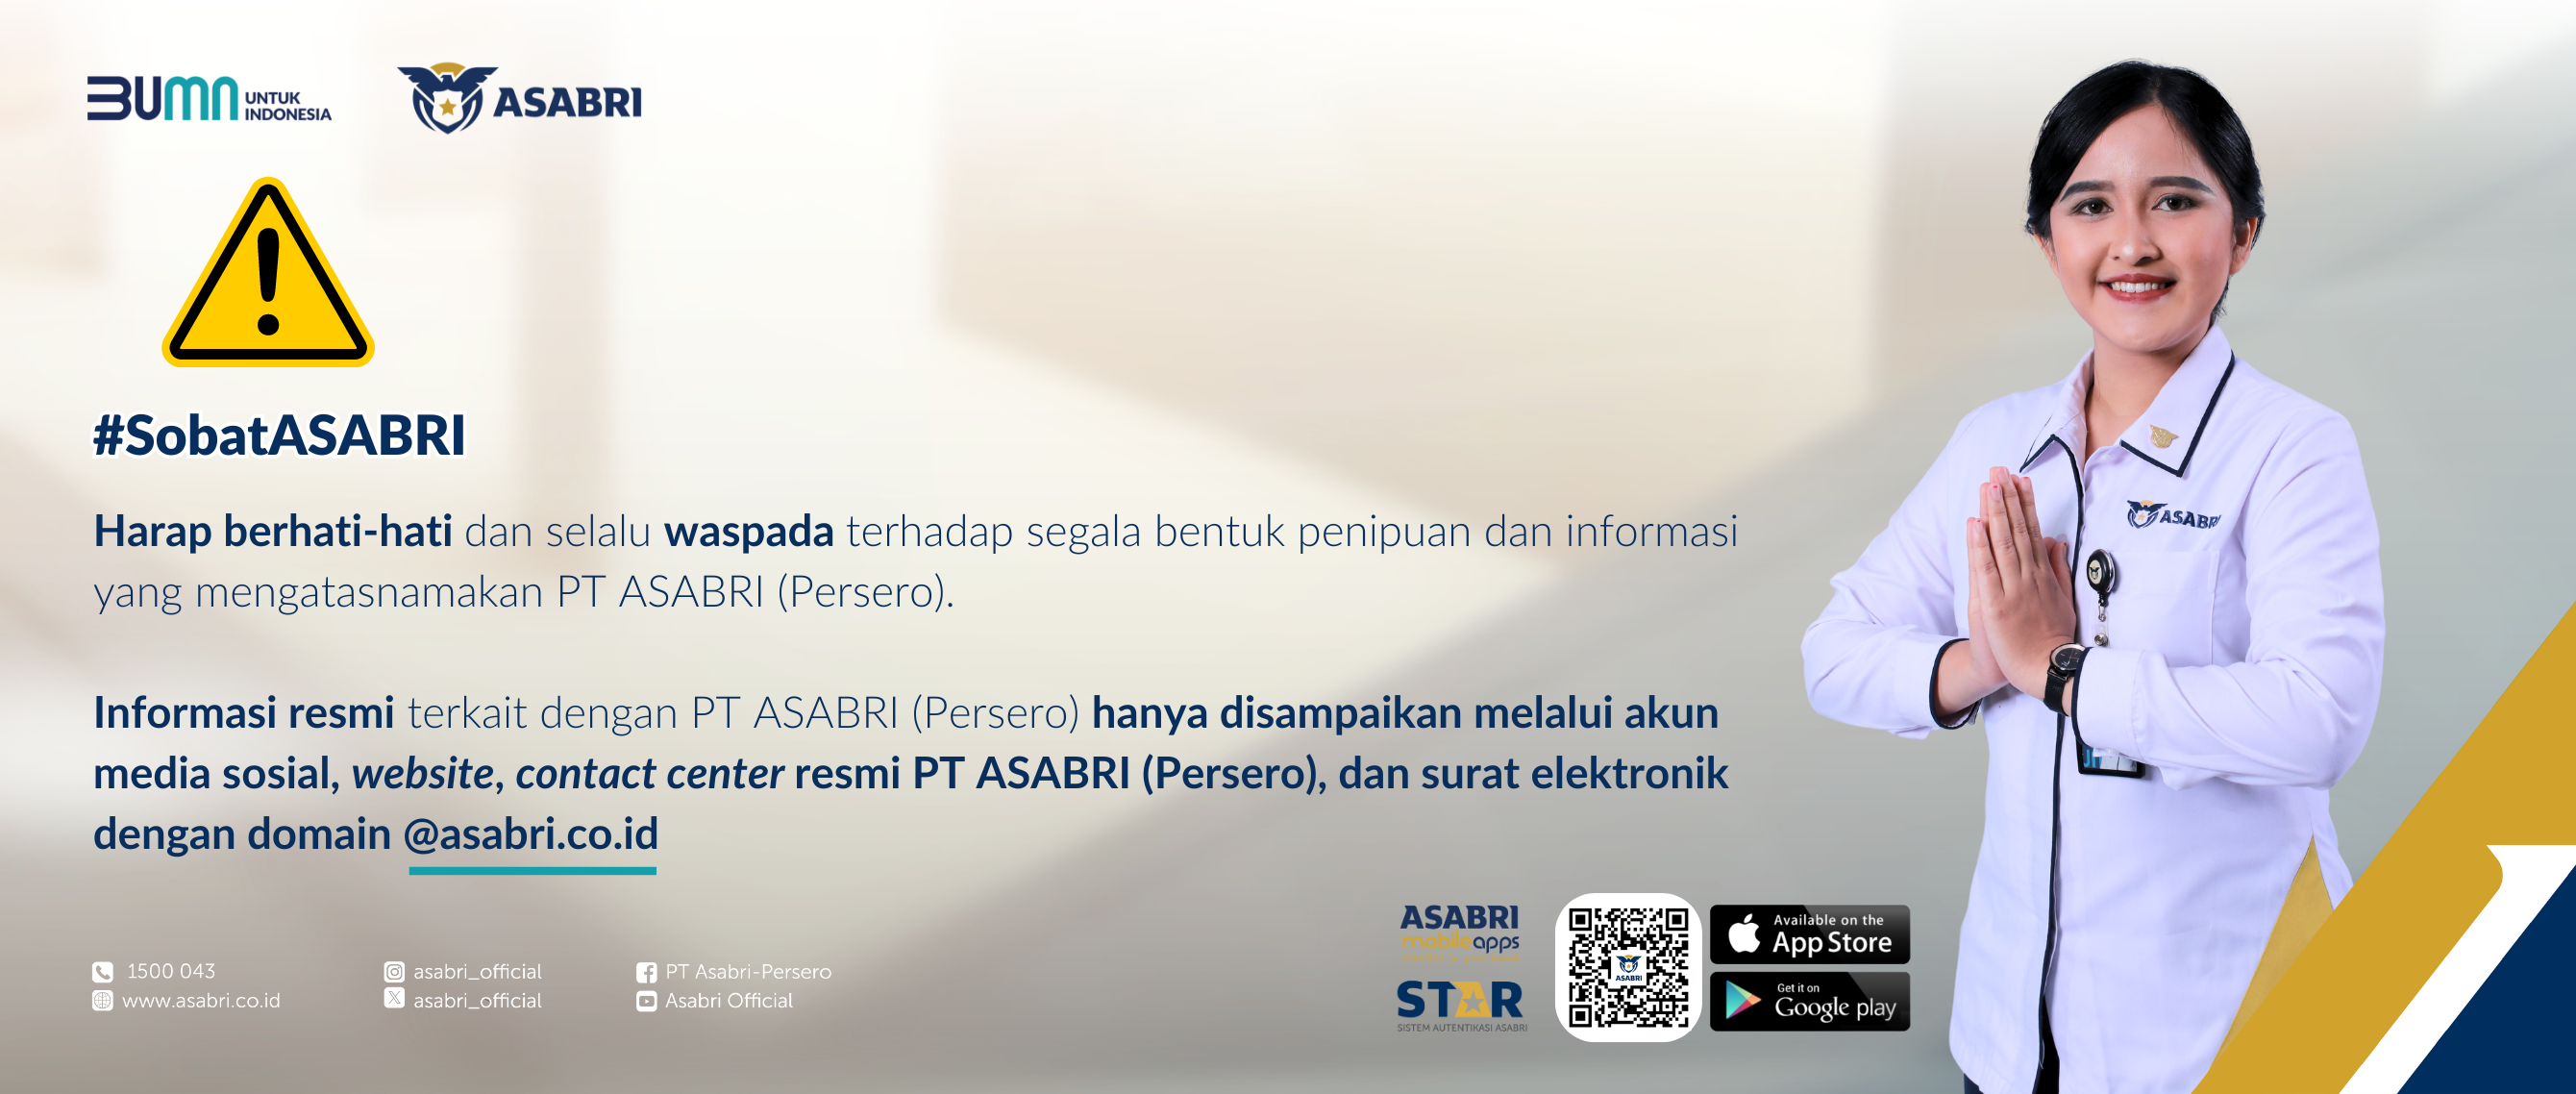 Asabri_|_Web_Corporate